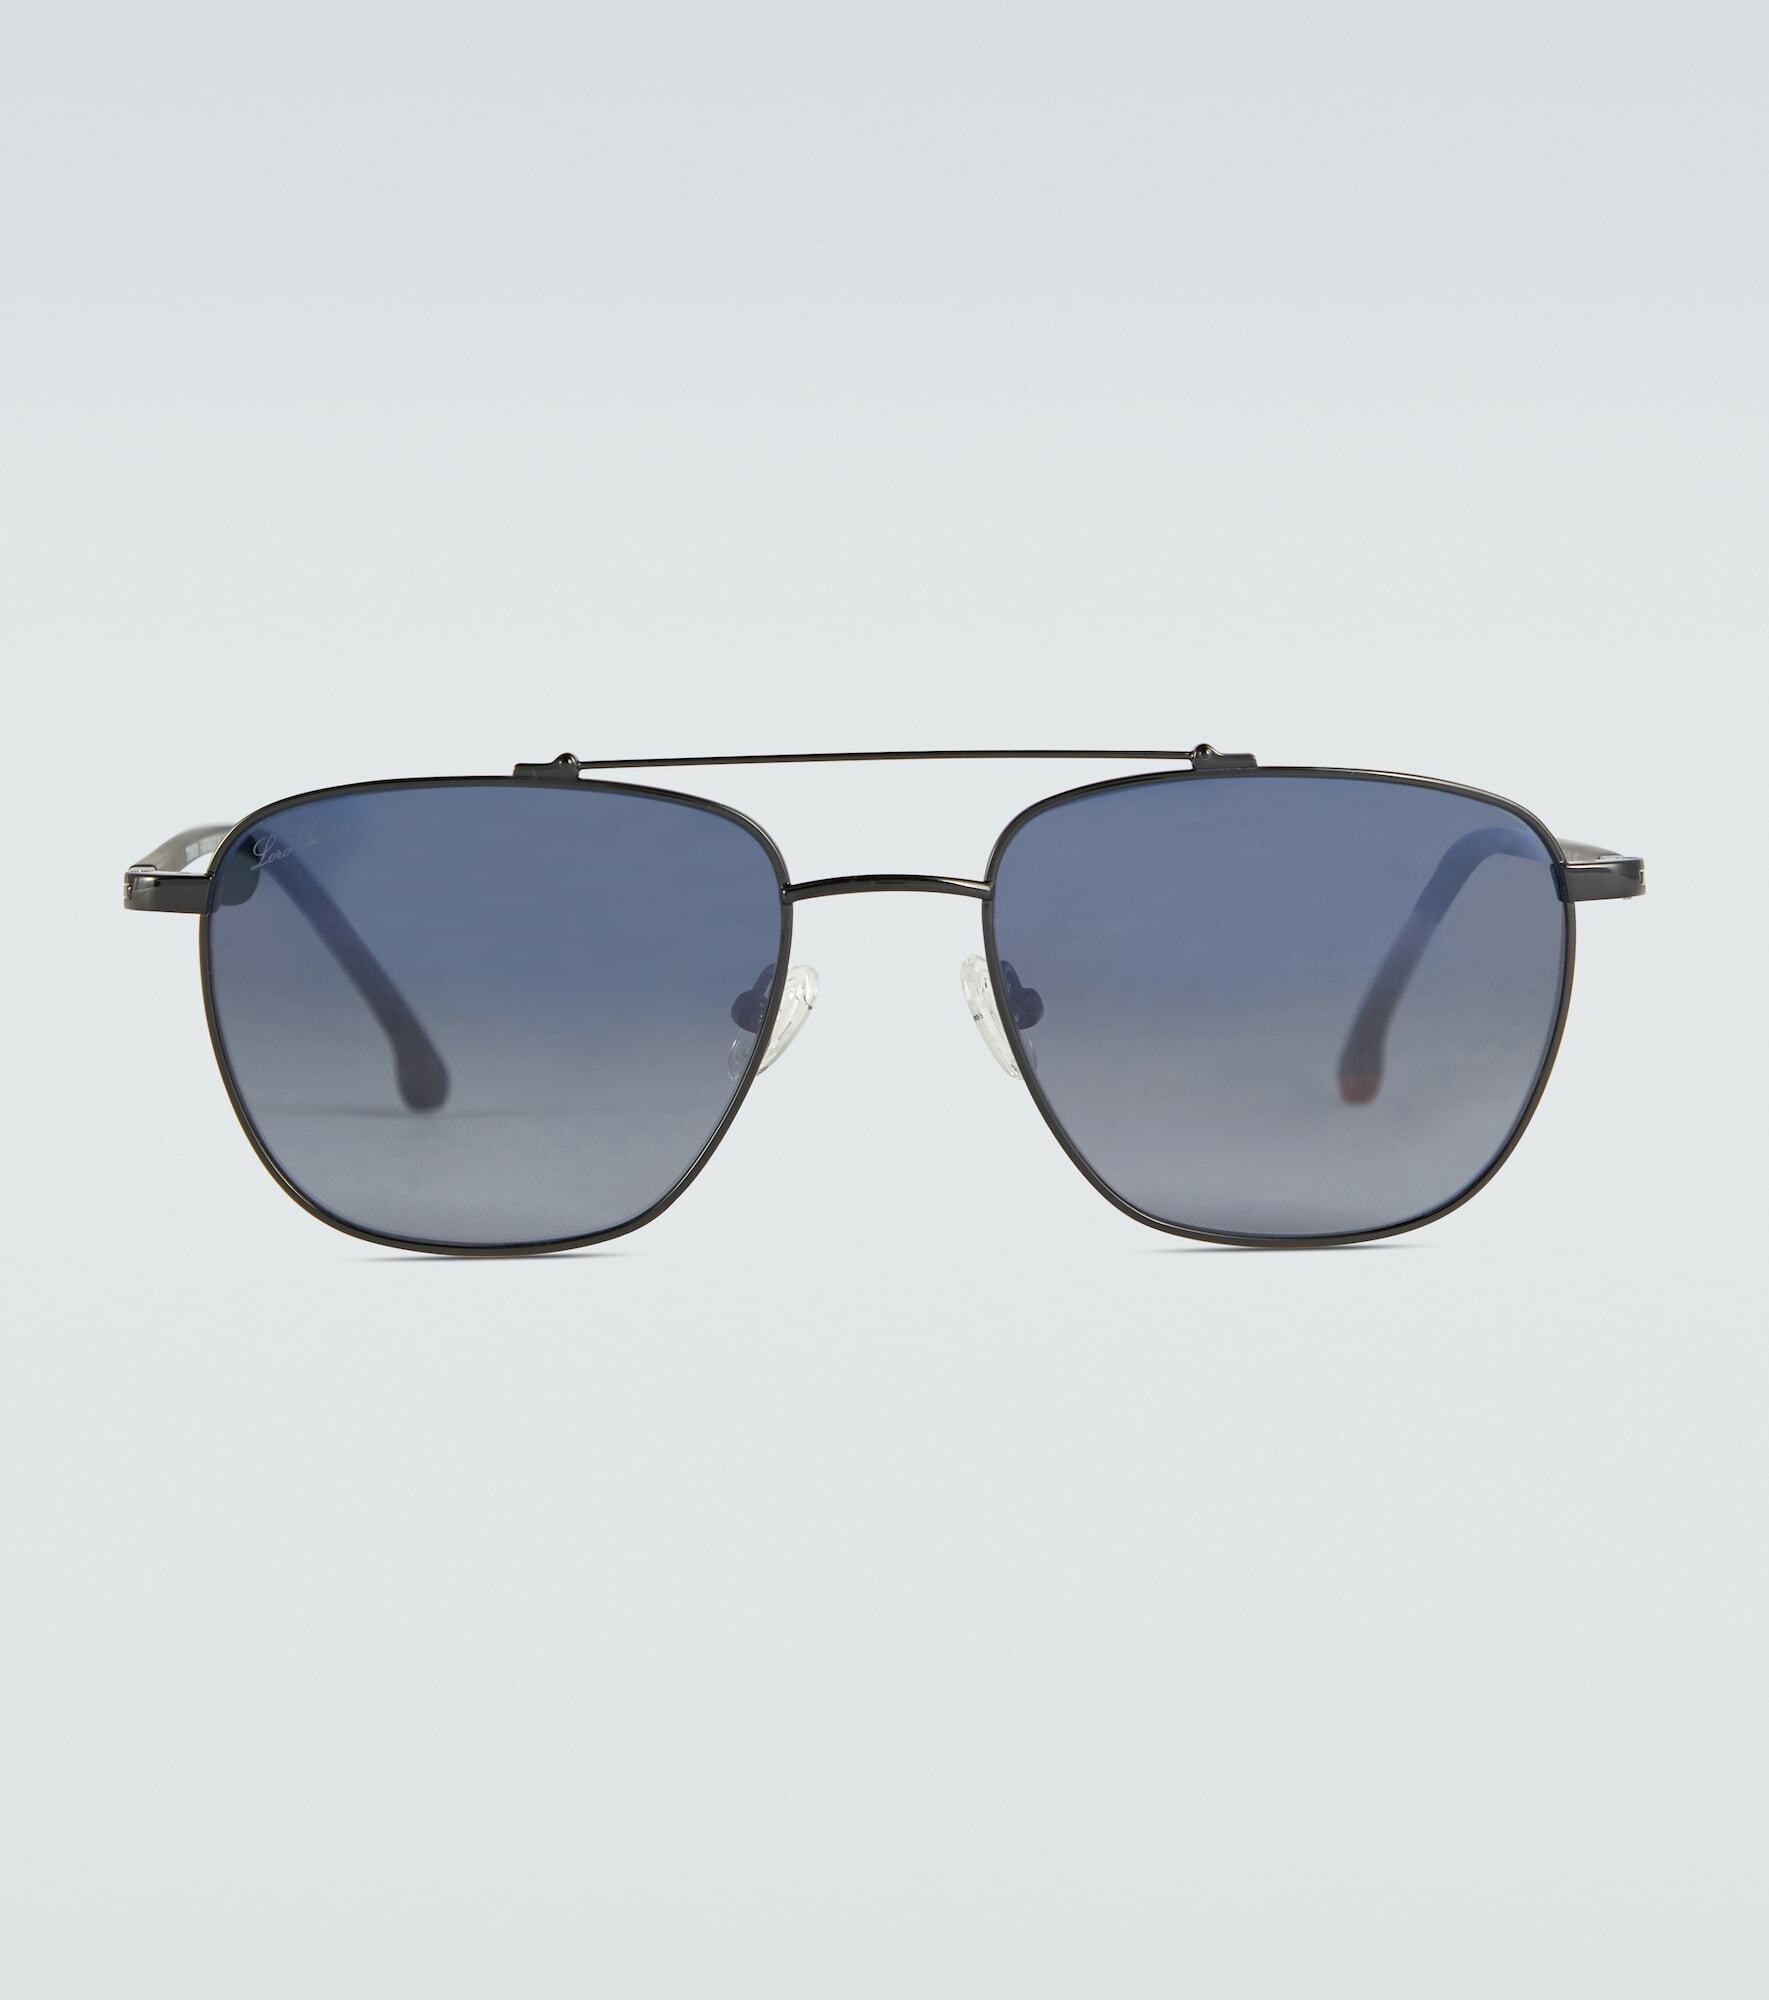 Loro Piana - Open aviator sunglasses Loro Piana